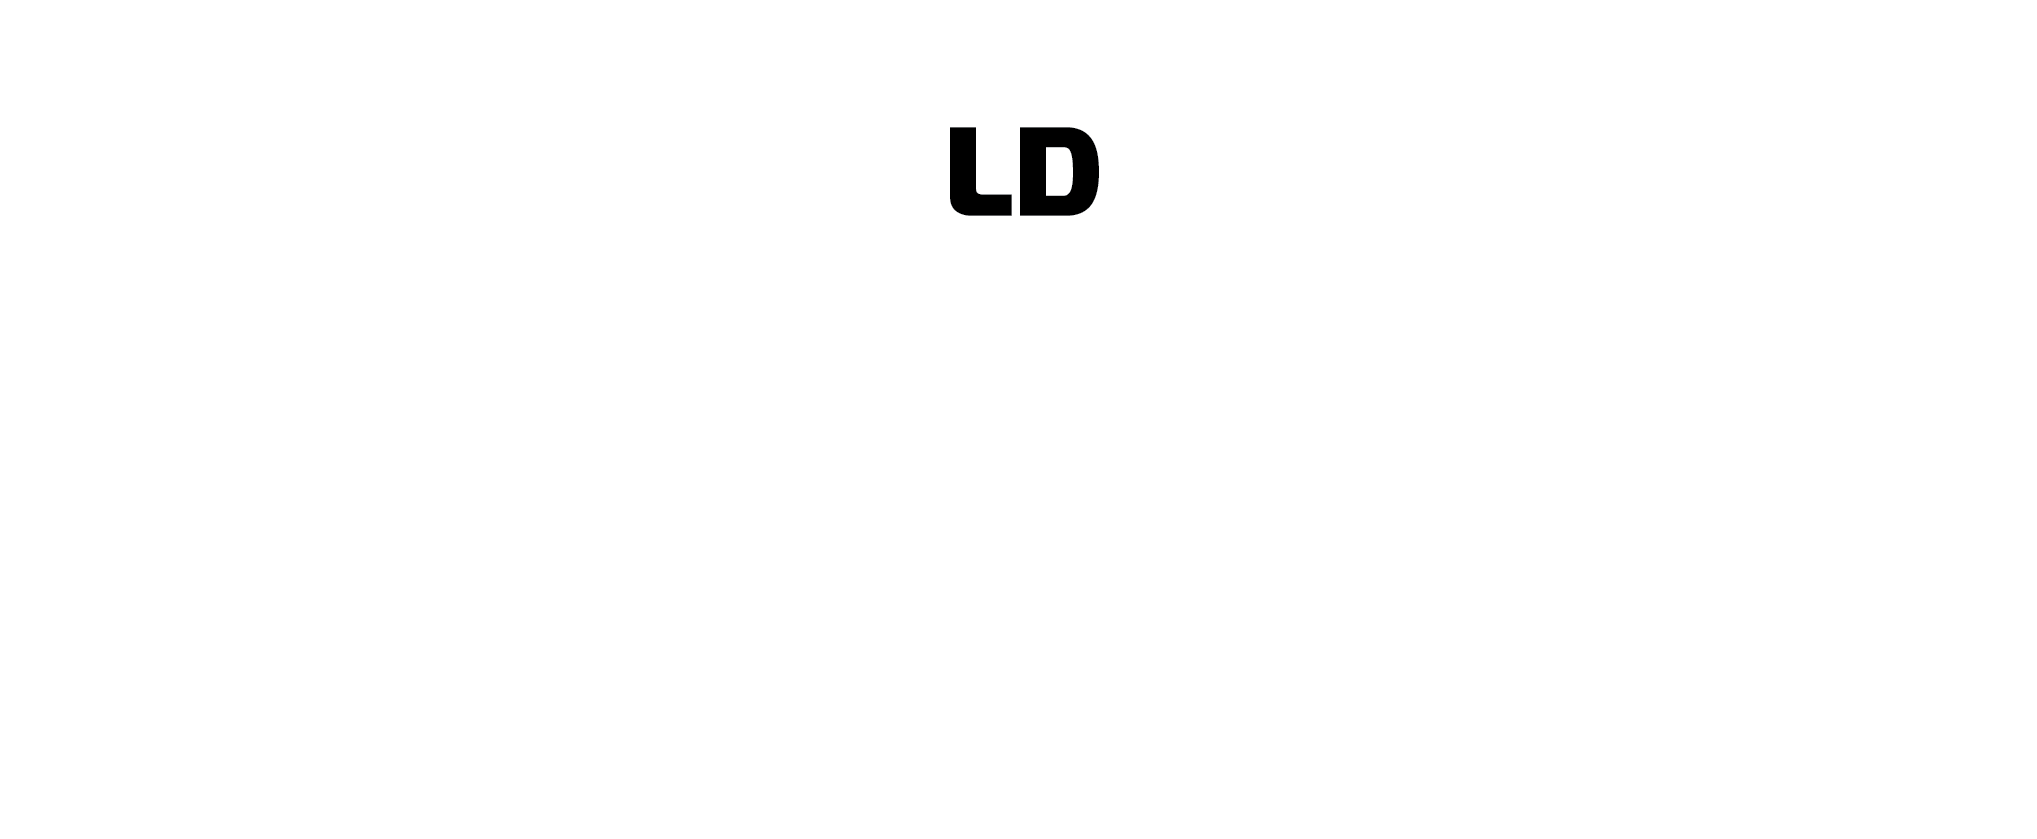 Lde Logo - LDEufonico Radio-TV Network